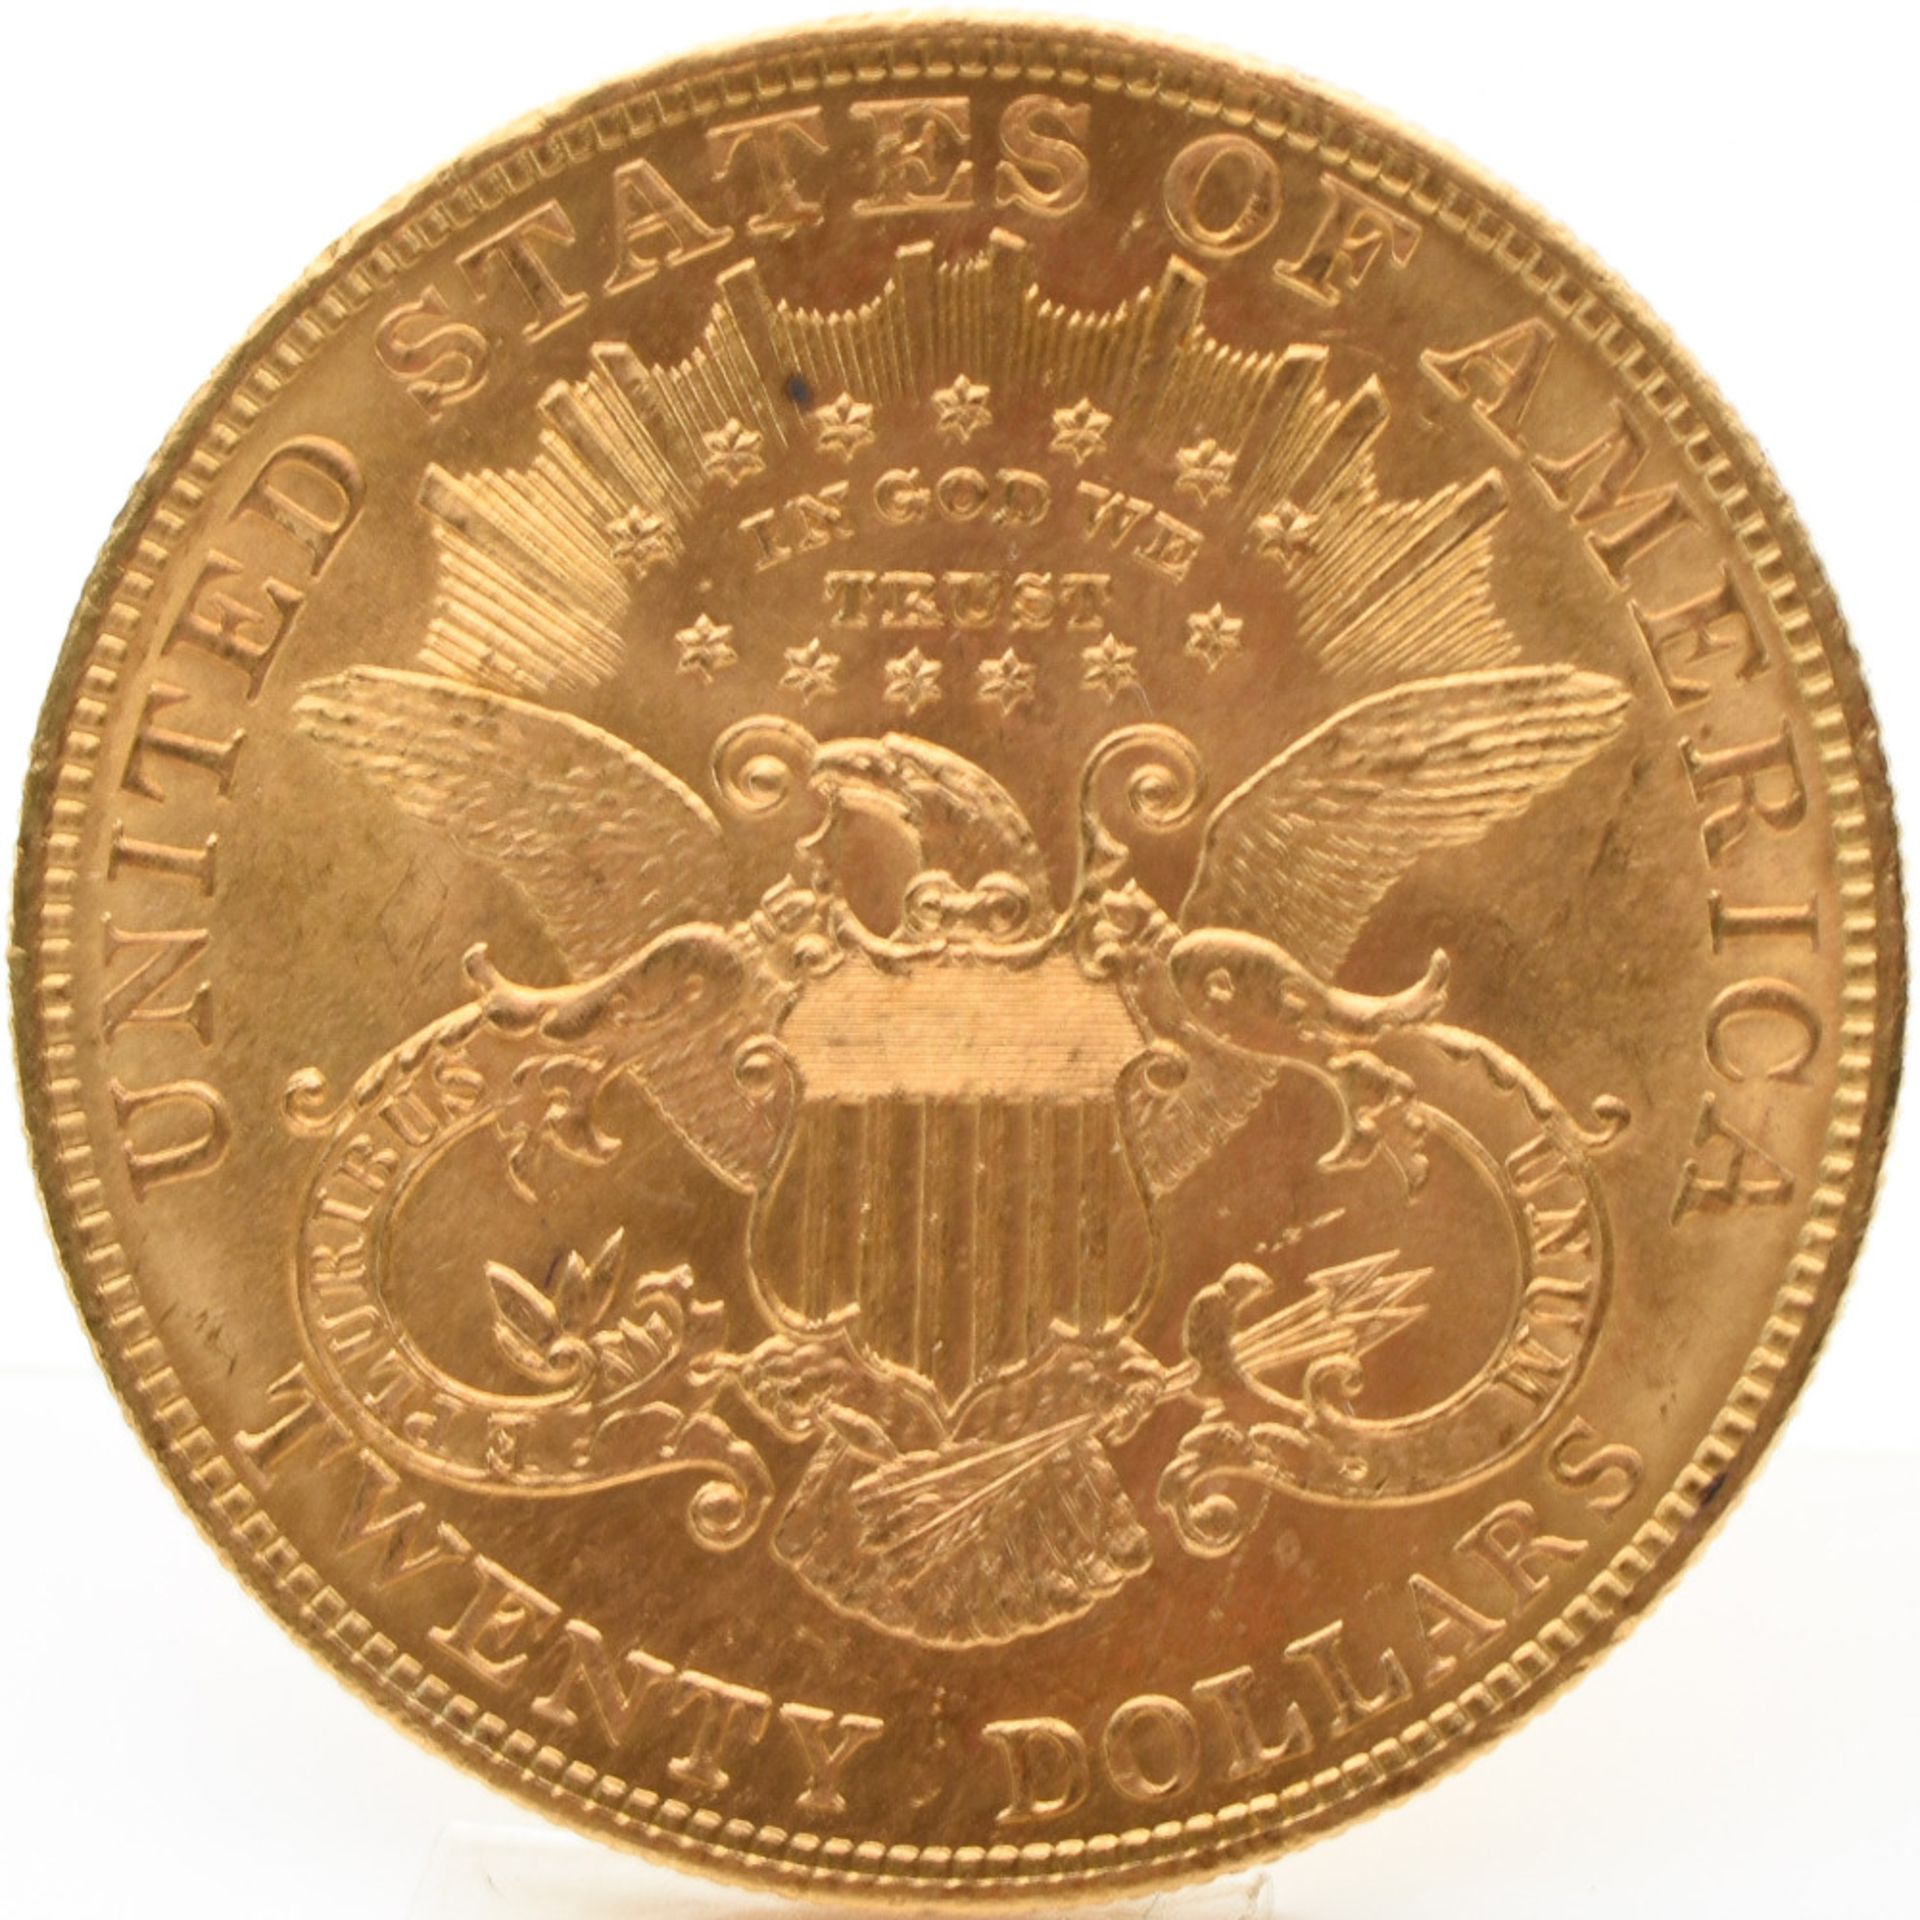 20 US-Dollar-Münze - Bild 3 aus 3